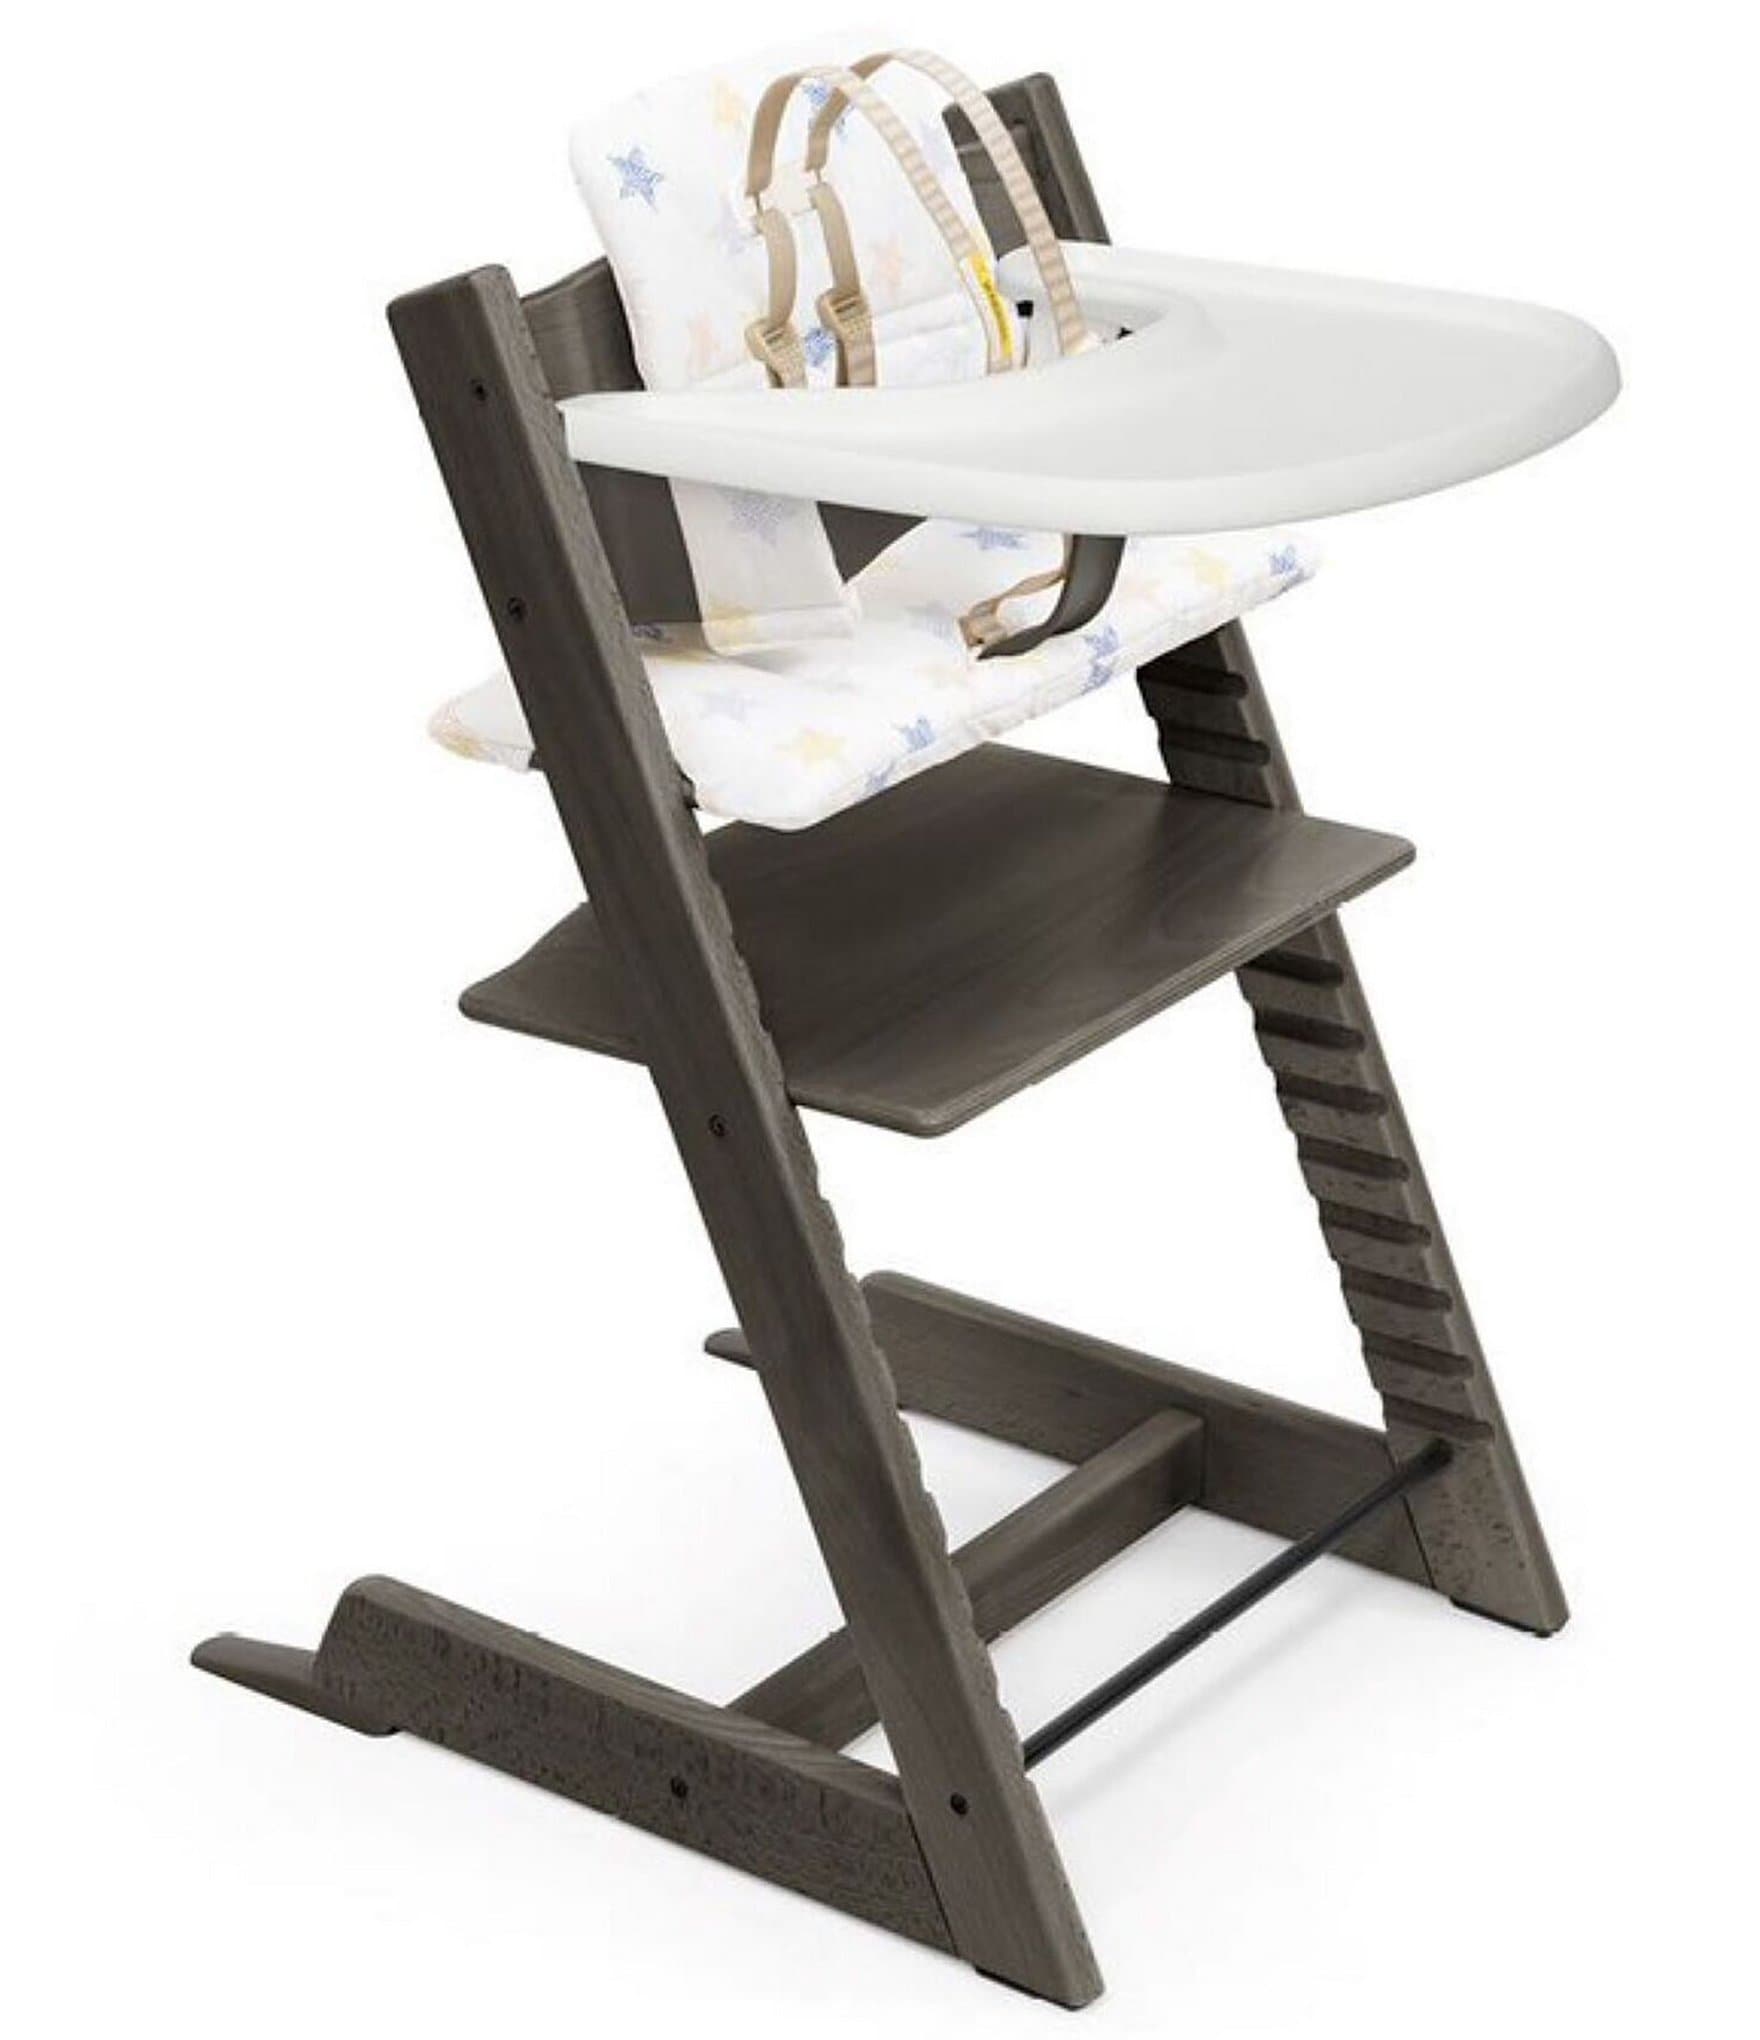 Stokke® Trapp® High Chair & Multi Star Cushion with Stokke® Tray in Hazy Grey Dillard's